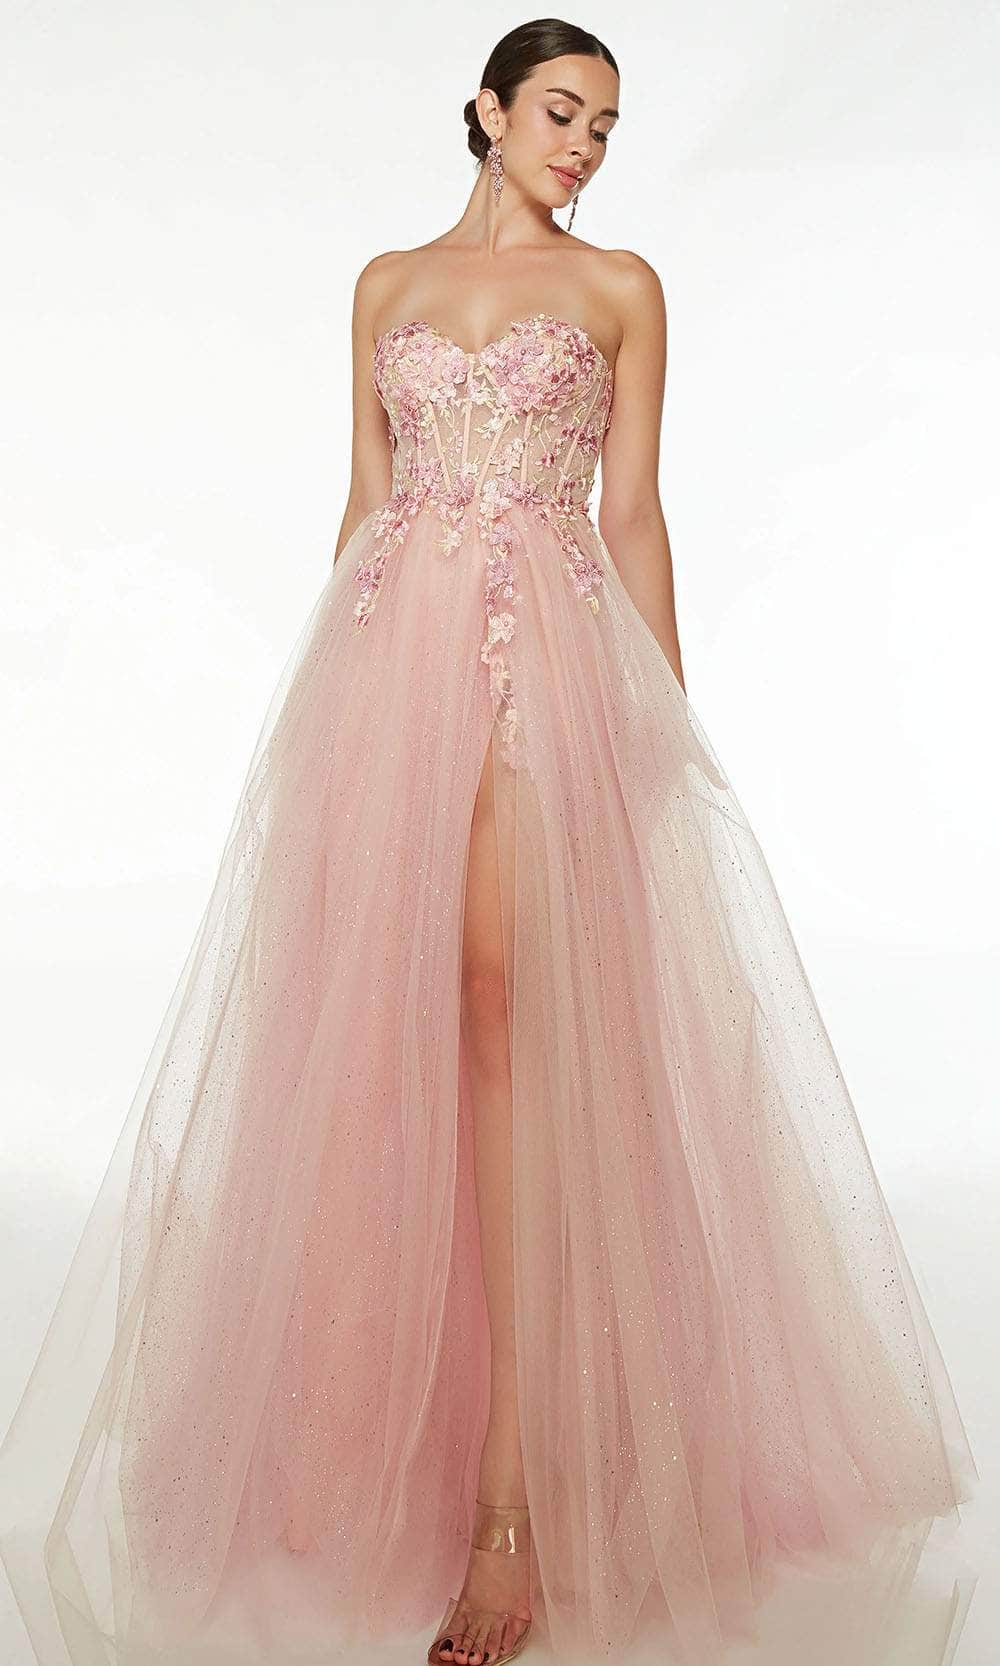 Image of Alyce Paris 61536 - Floral Lace Appliqued Prom Gown